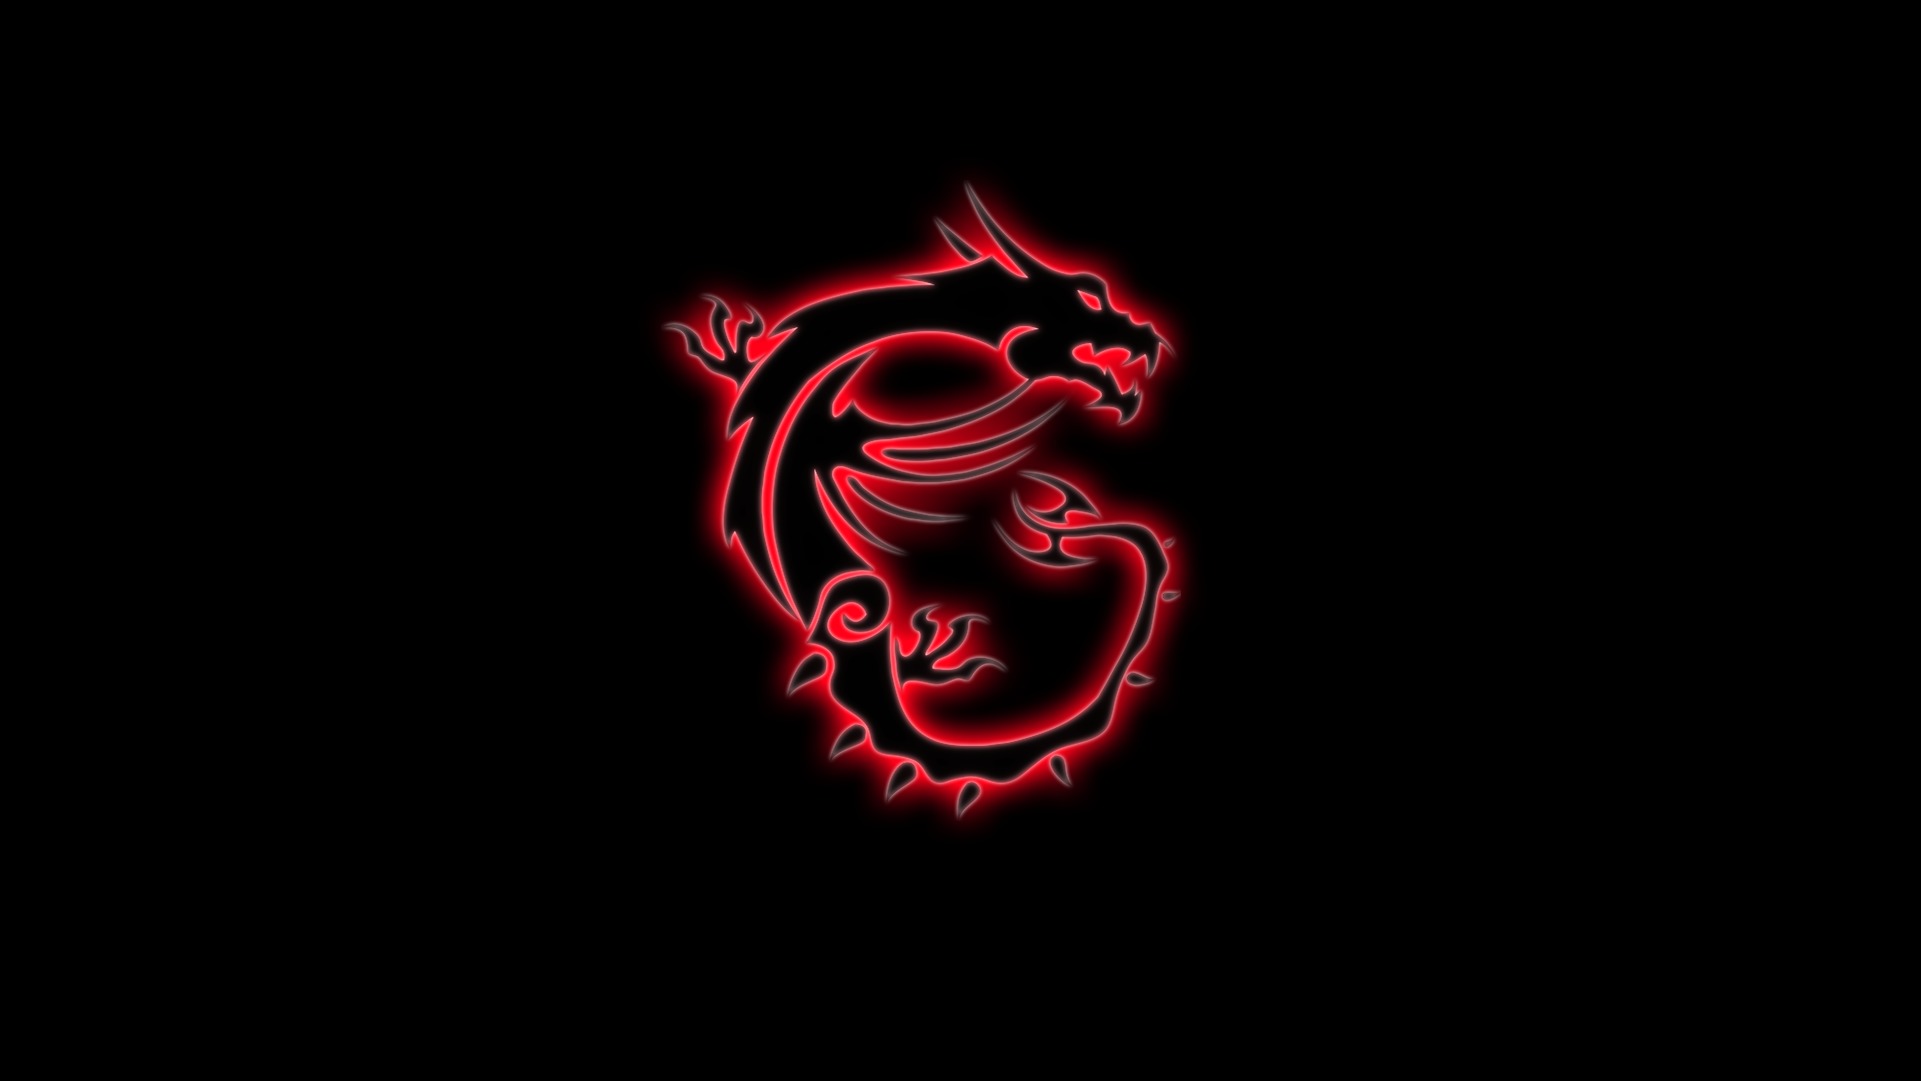 Free download gaming dragon red game red dragon wallpapers hi tech